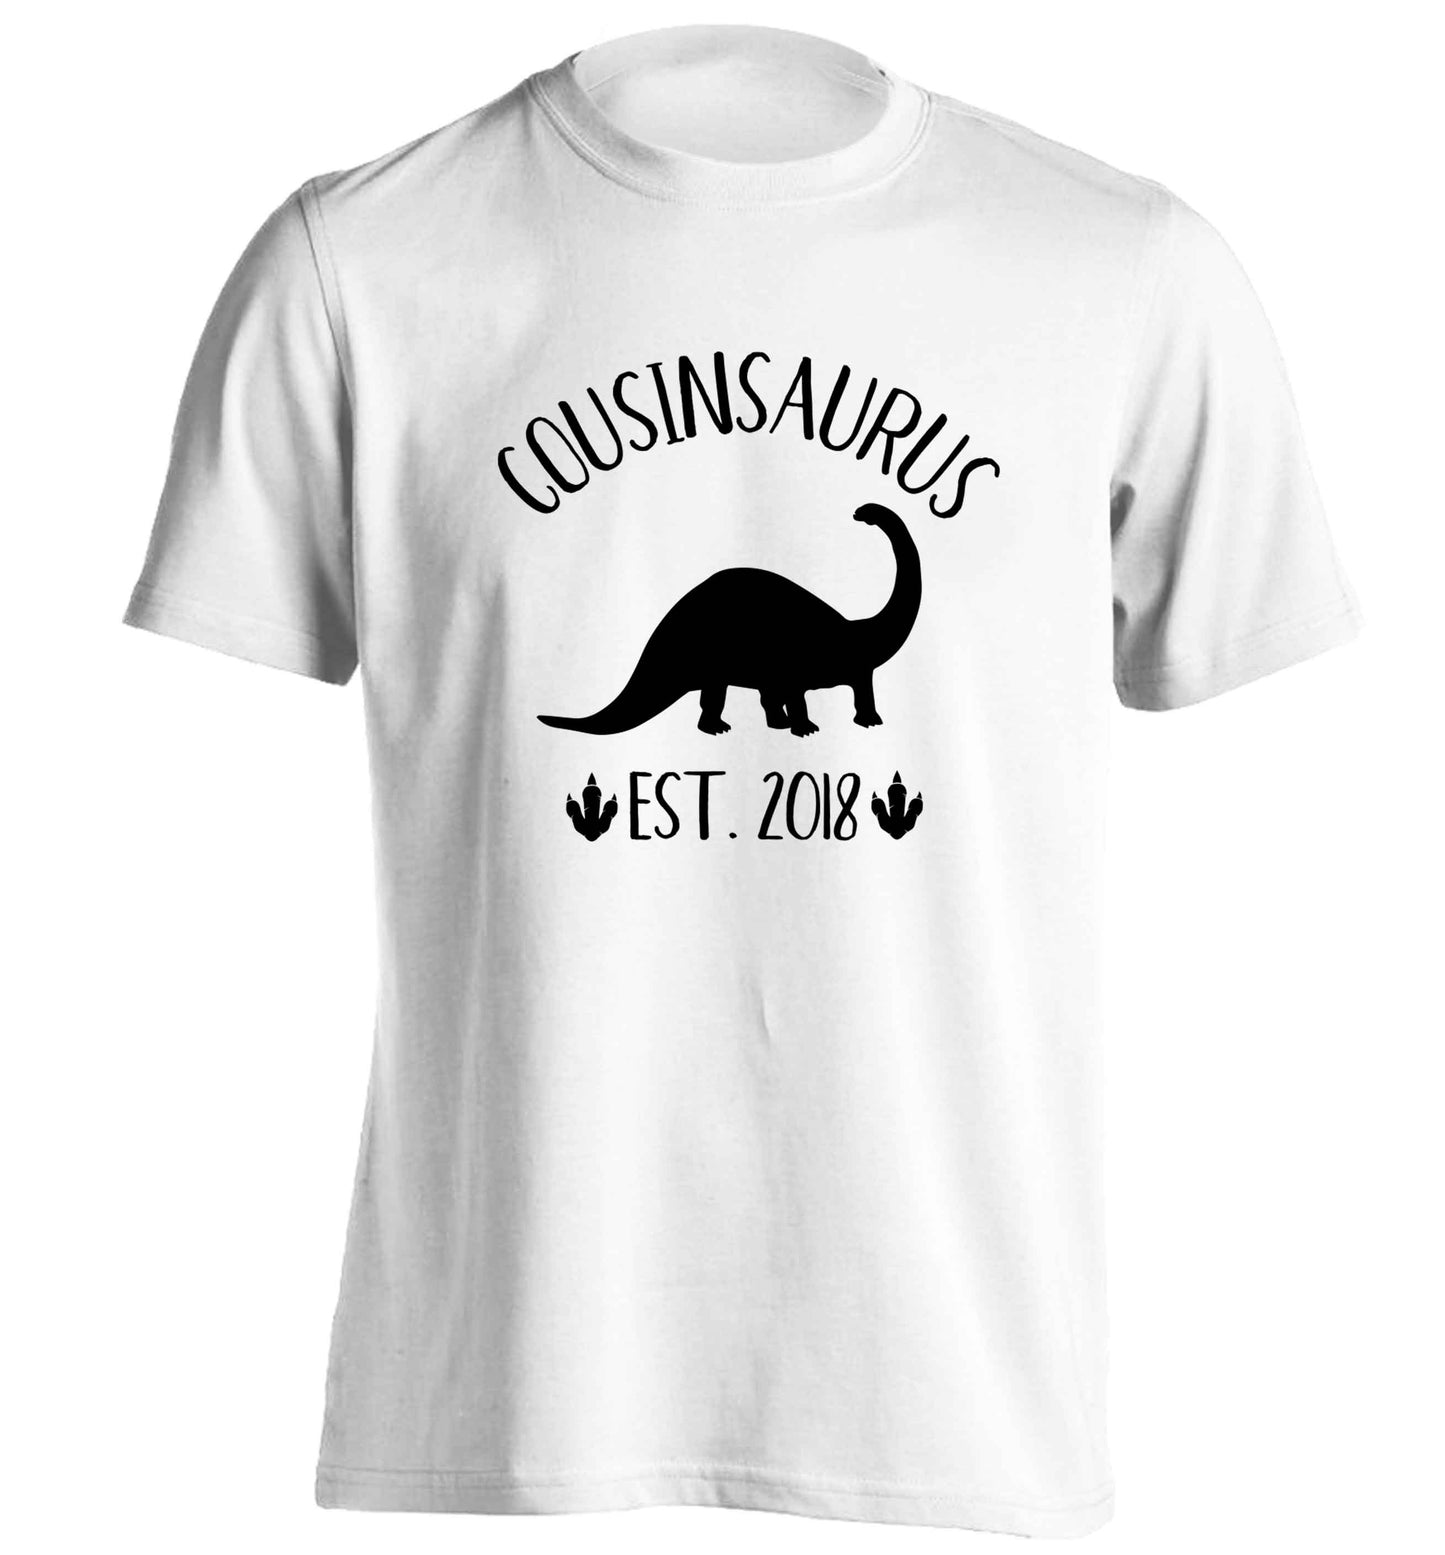 Personalised cousinsaurus since (custom date) adults unisex white Tshirt 2XL